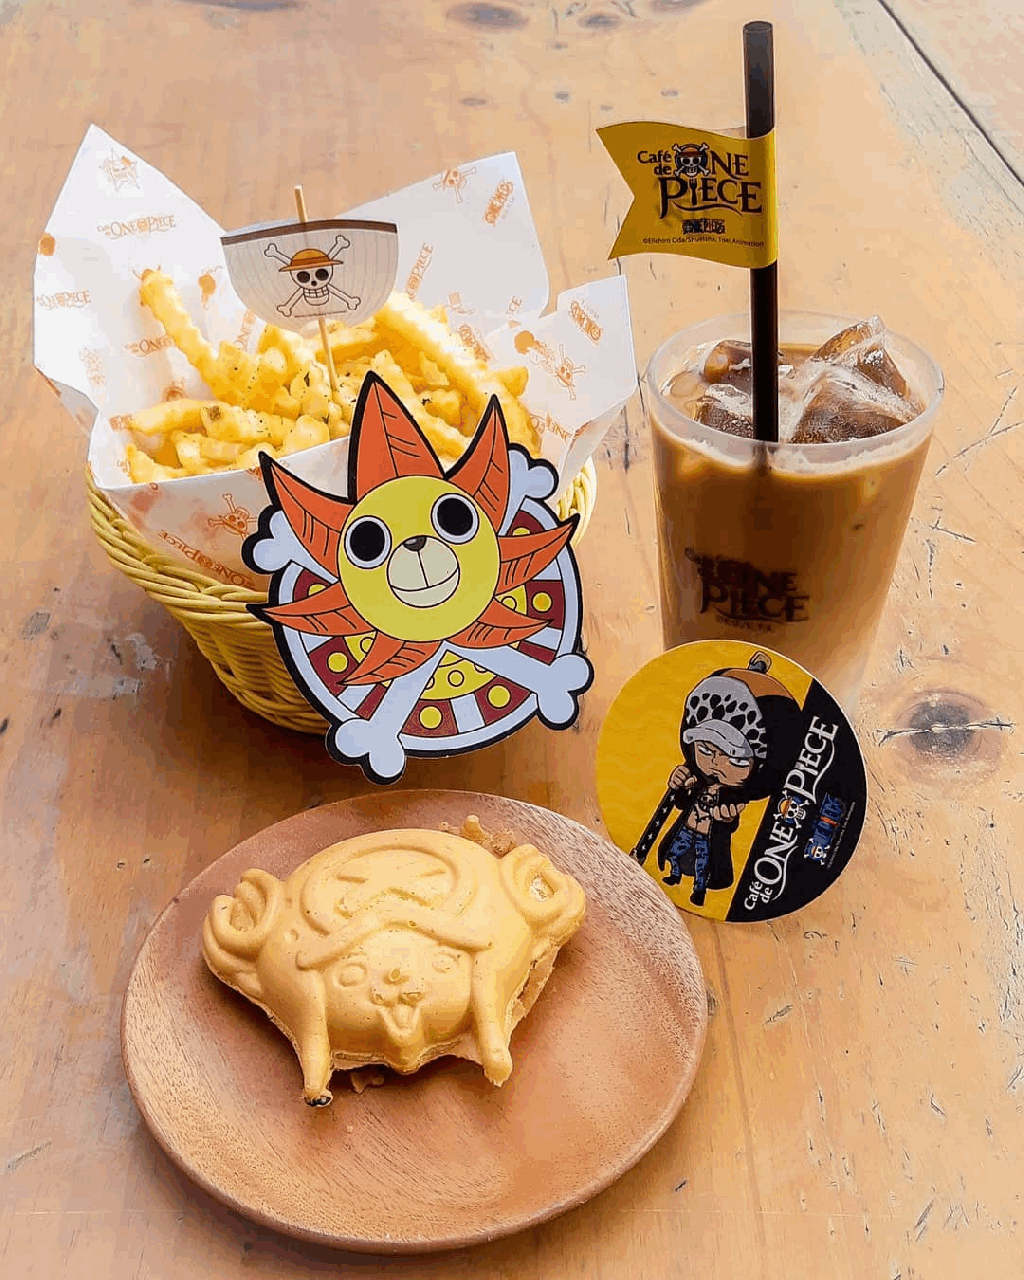 Food at Cafe de One Piece